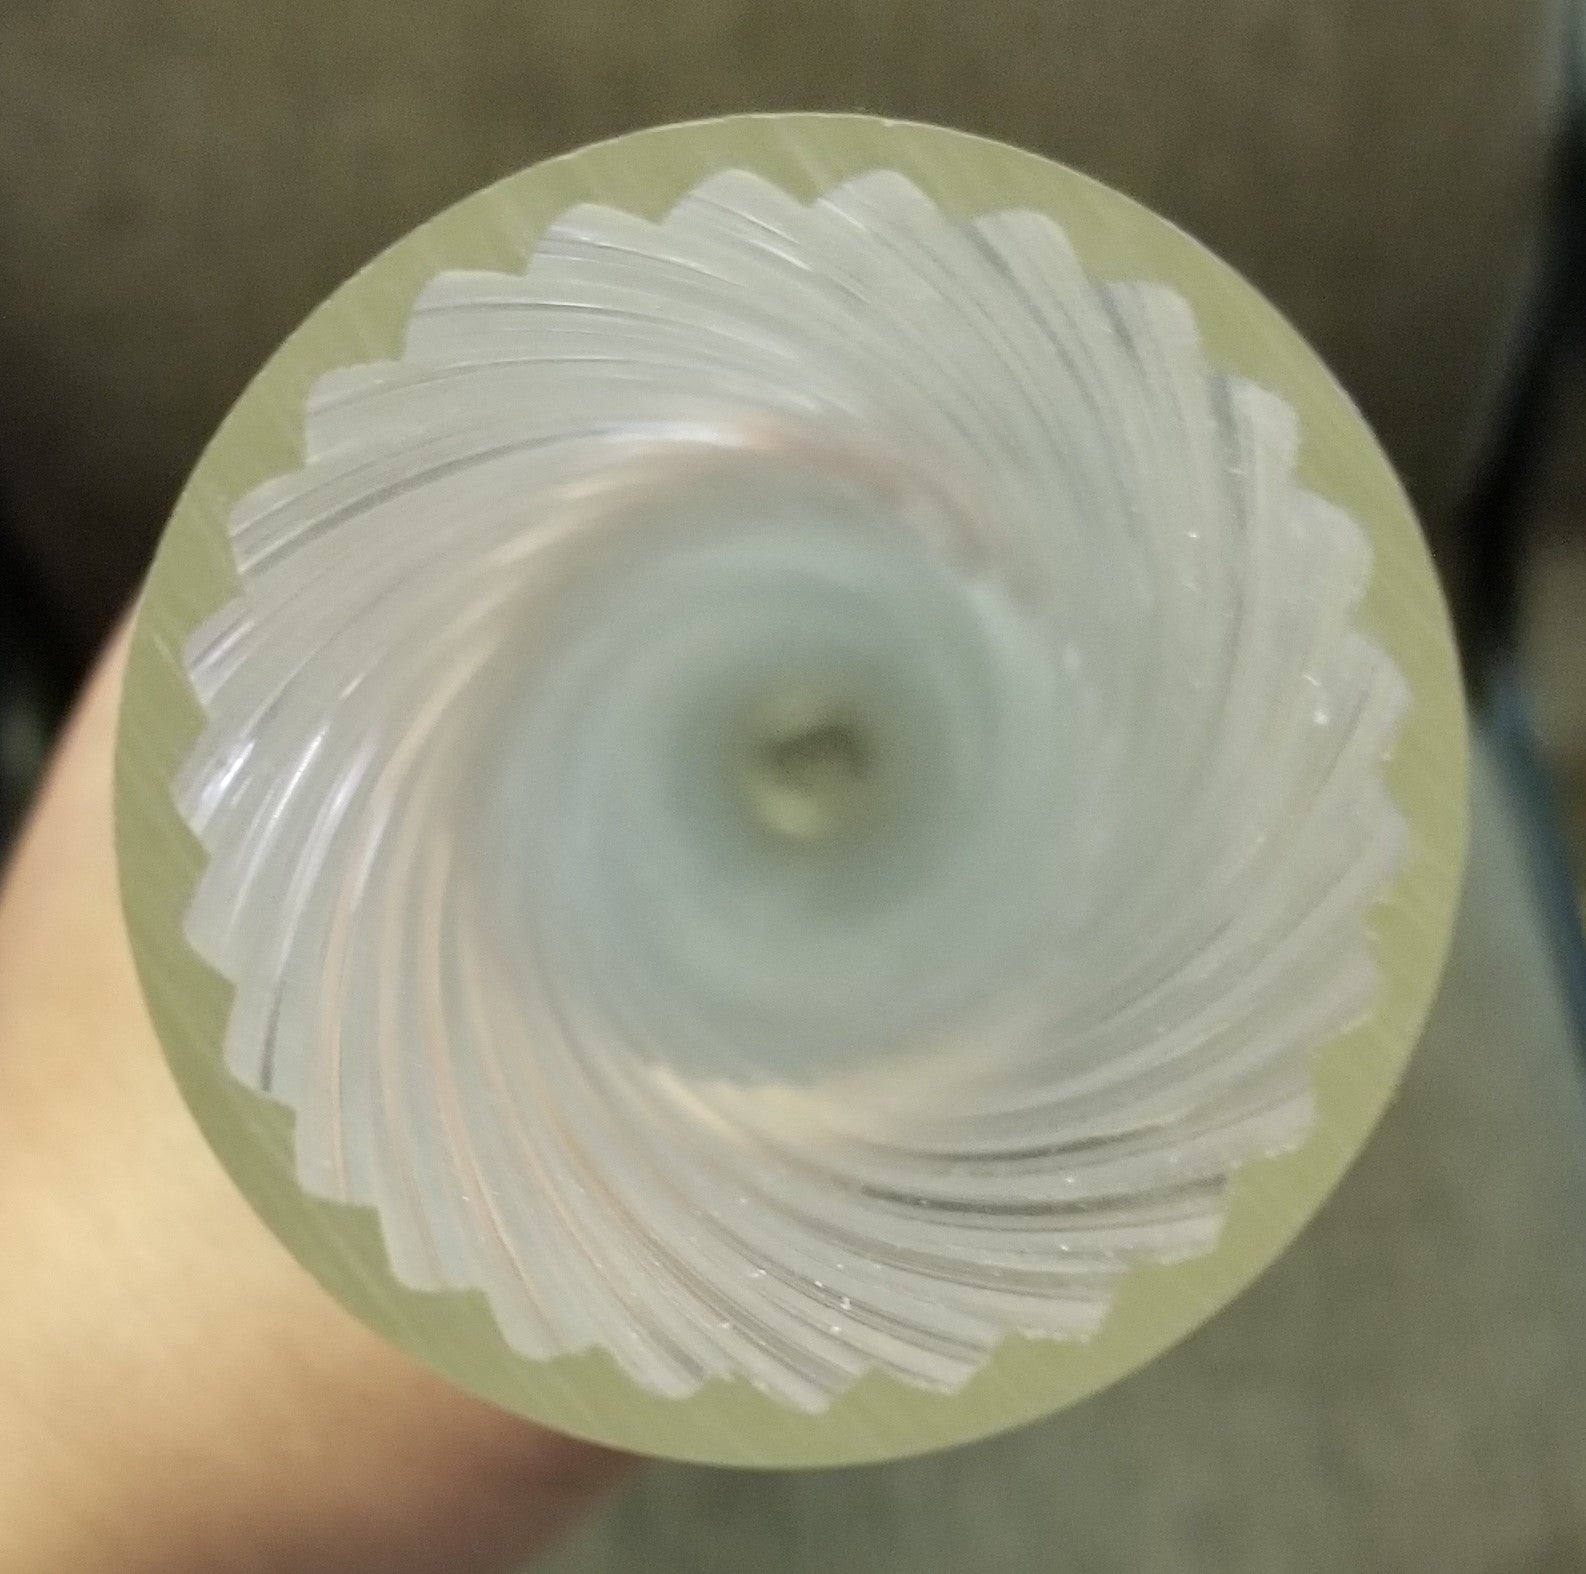 21" Plastic Tubing, swirl pattern